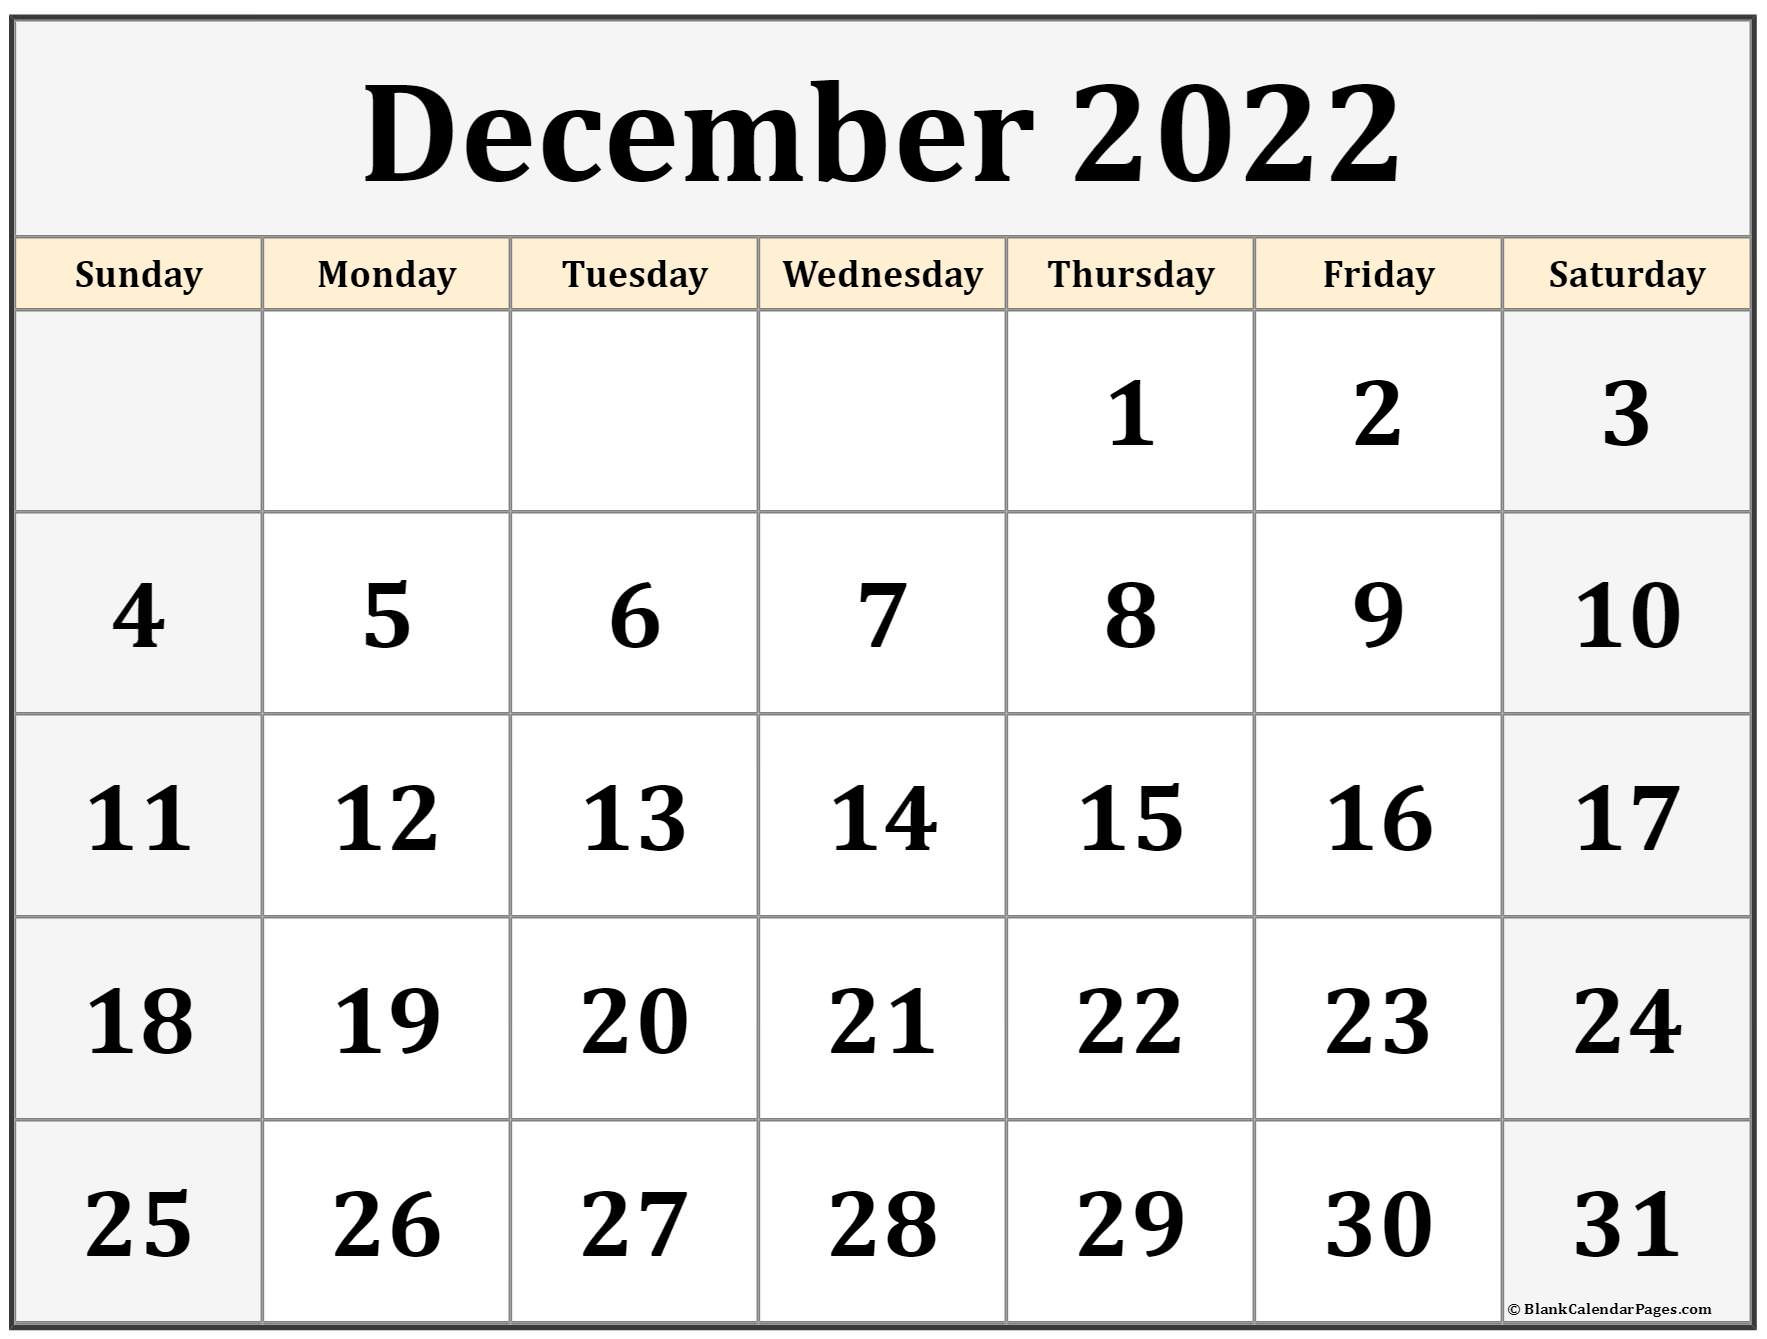 December 2022 Calendar | Free Printable Calendar Templates  December 2022 Hindu Calendar